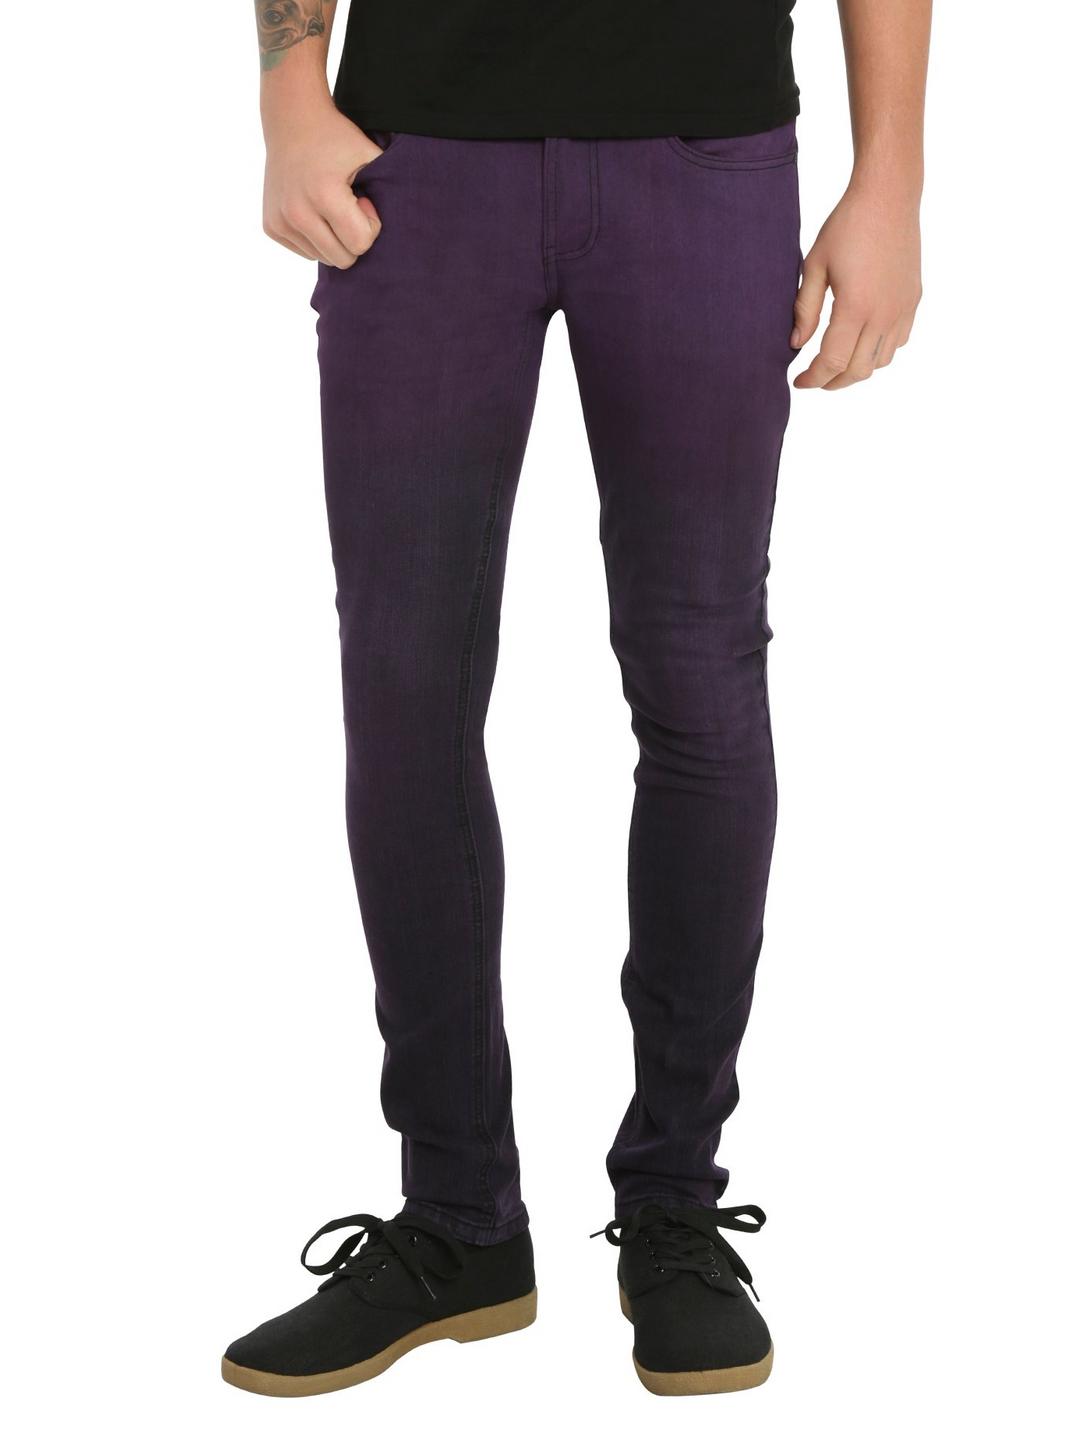 RUDE Purple Ombre Super Skinny Jeans, PURPLE, hi-res